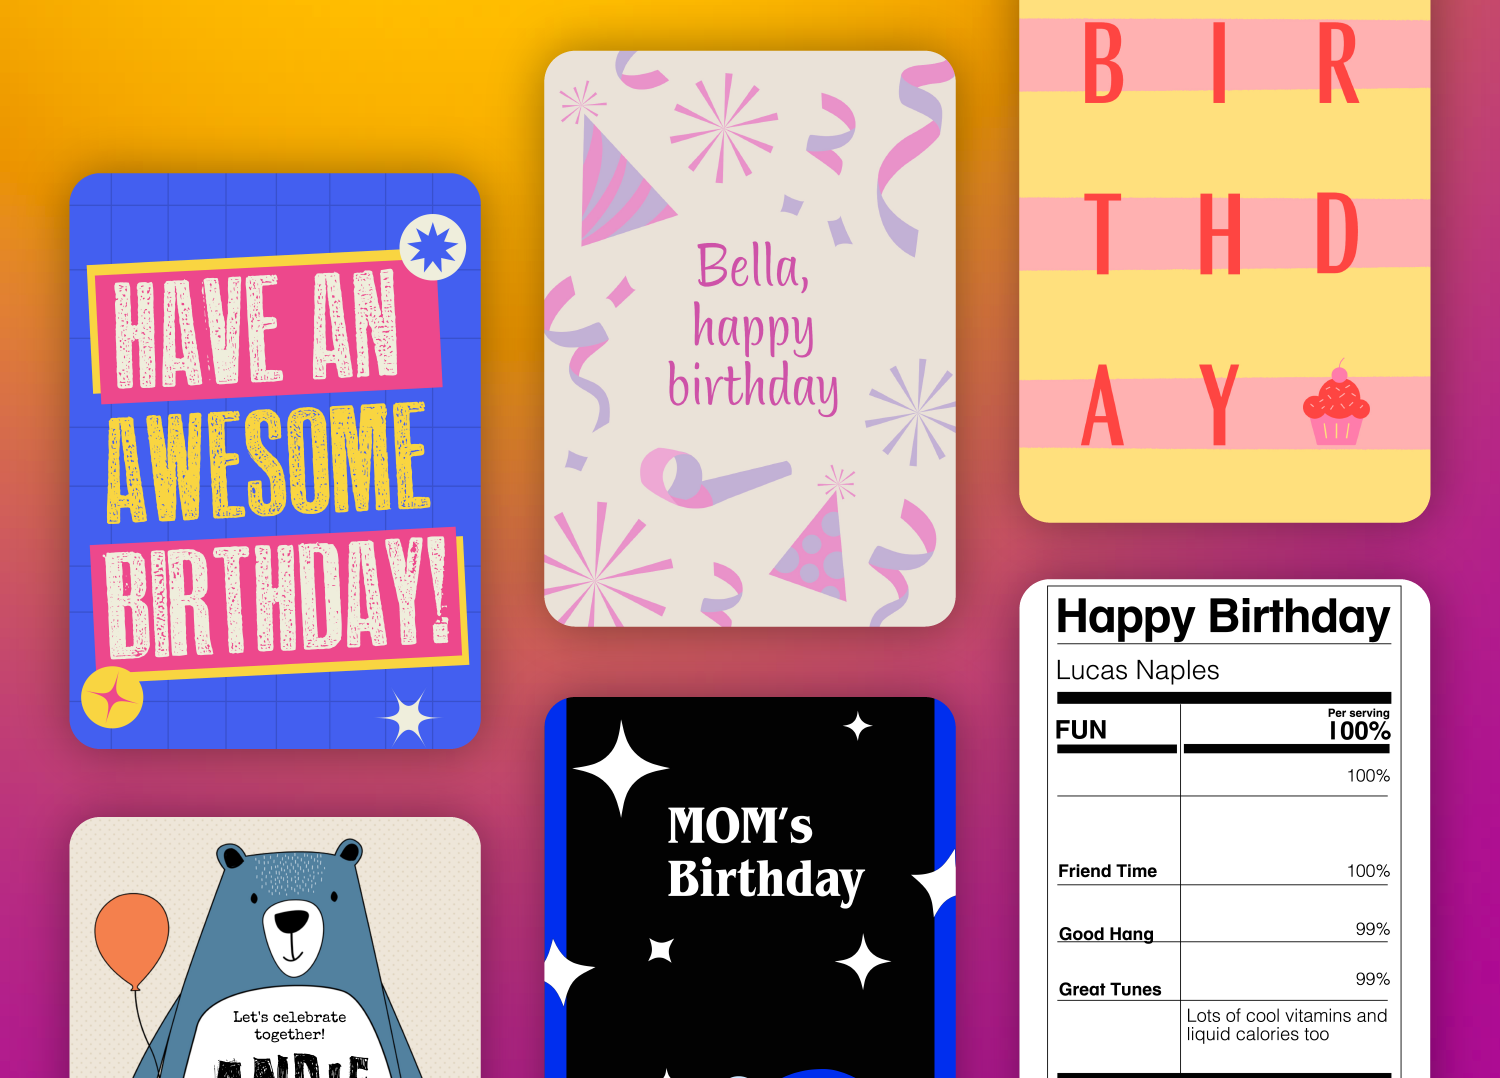 12 Funny Birthday Card Ideas - Picsart Blog